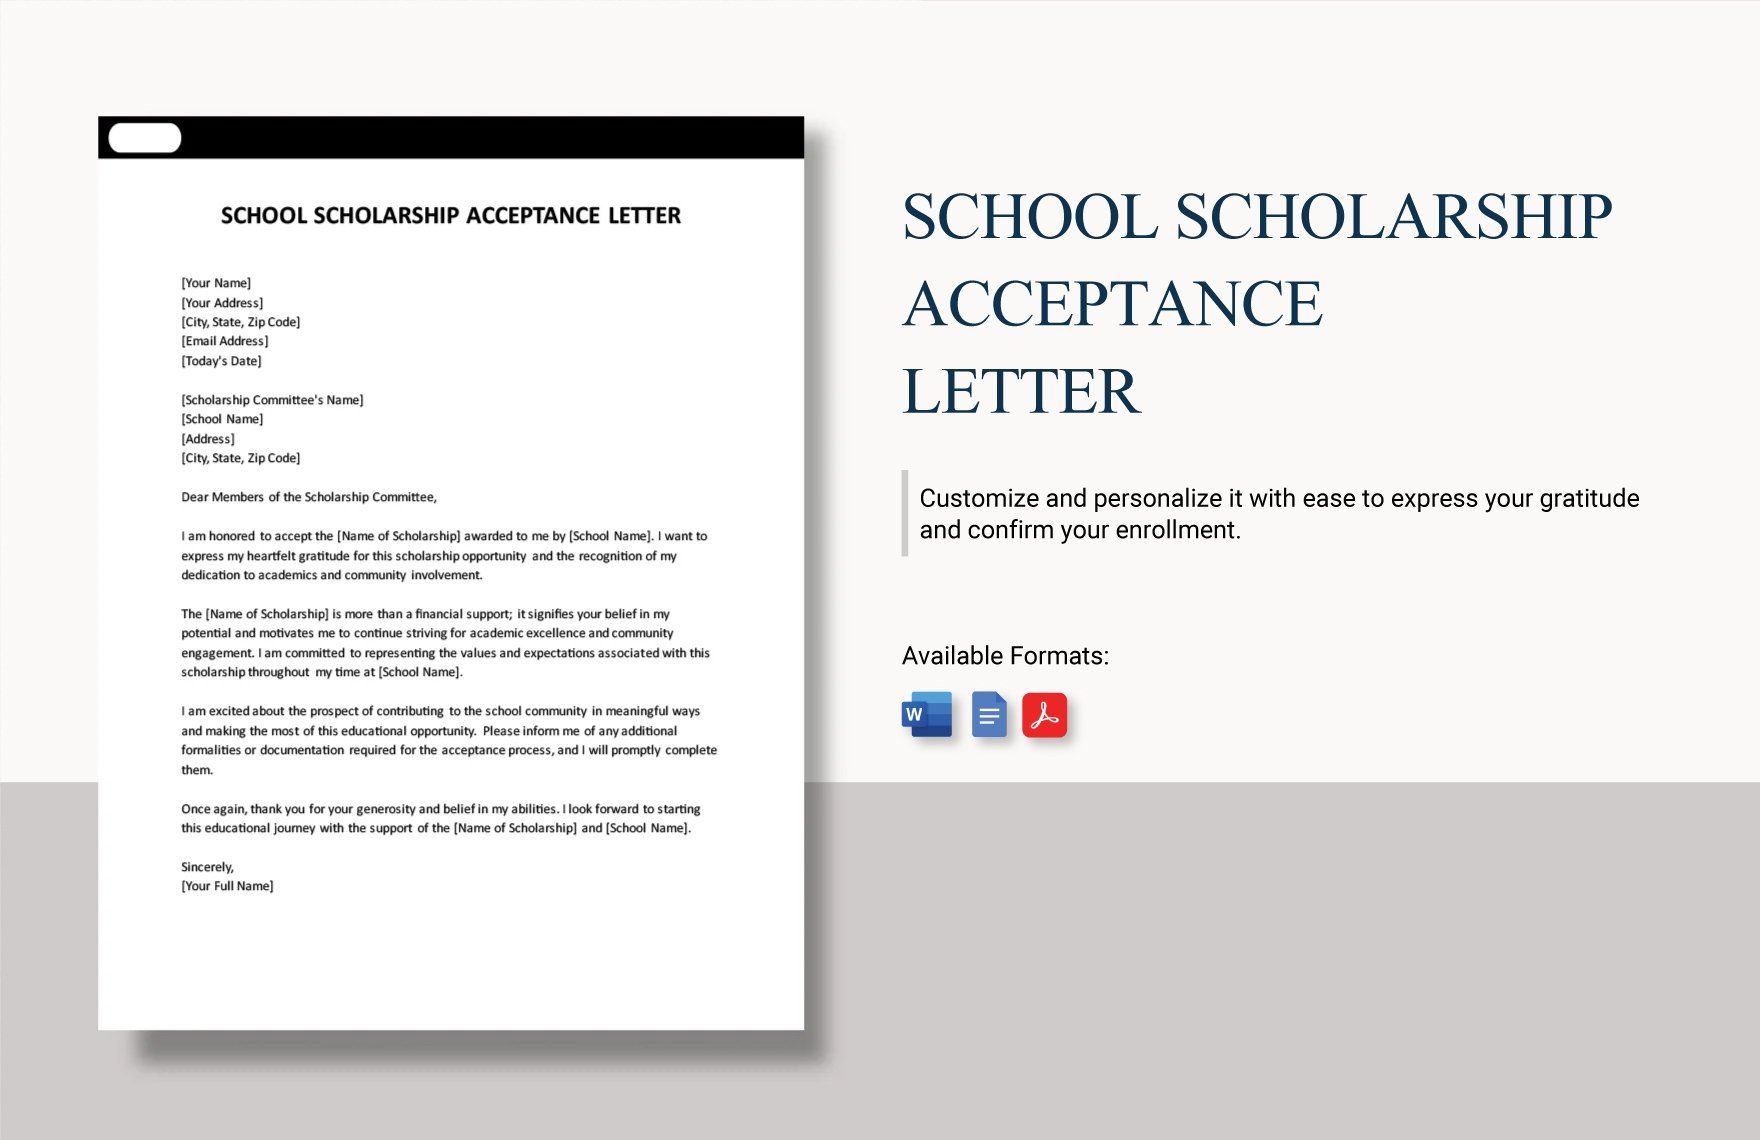 School Scholarship Acceptance Letter in Word, Google Docs, PDF